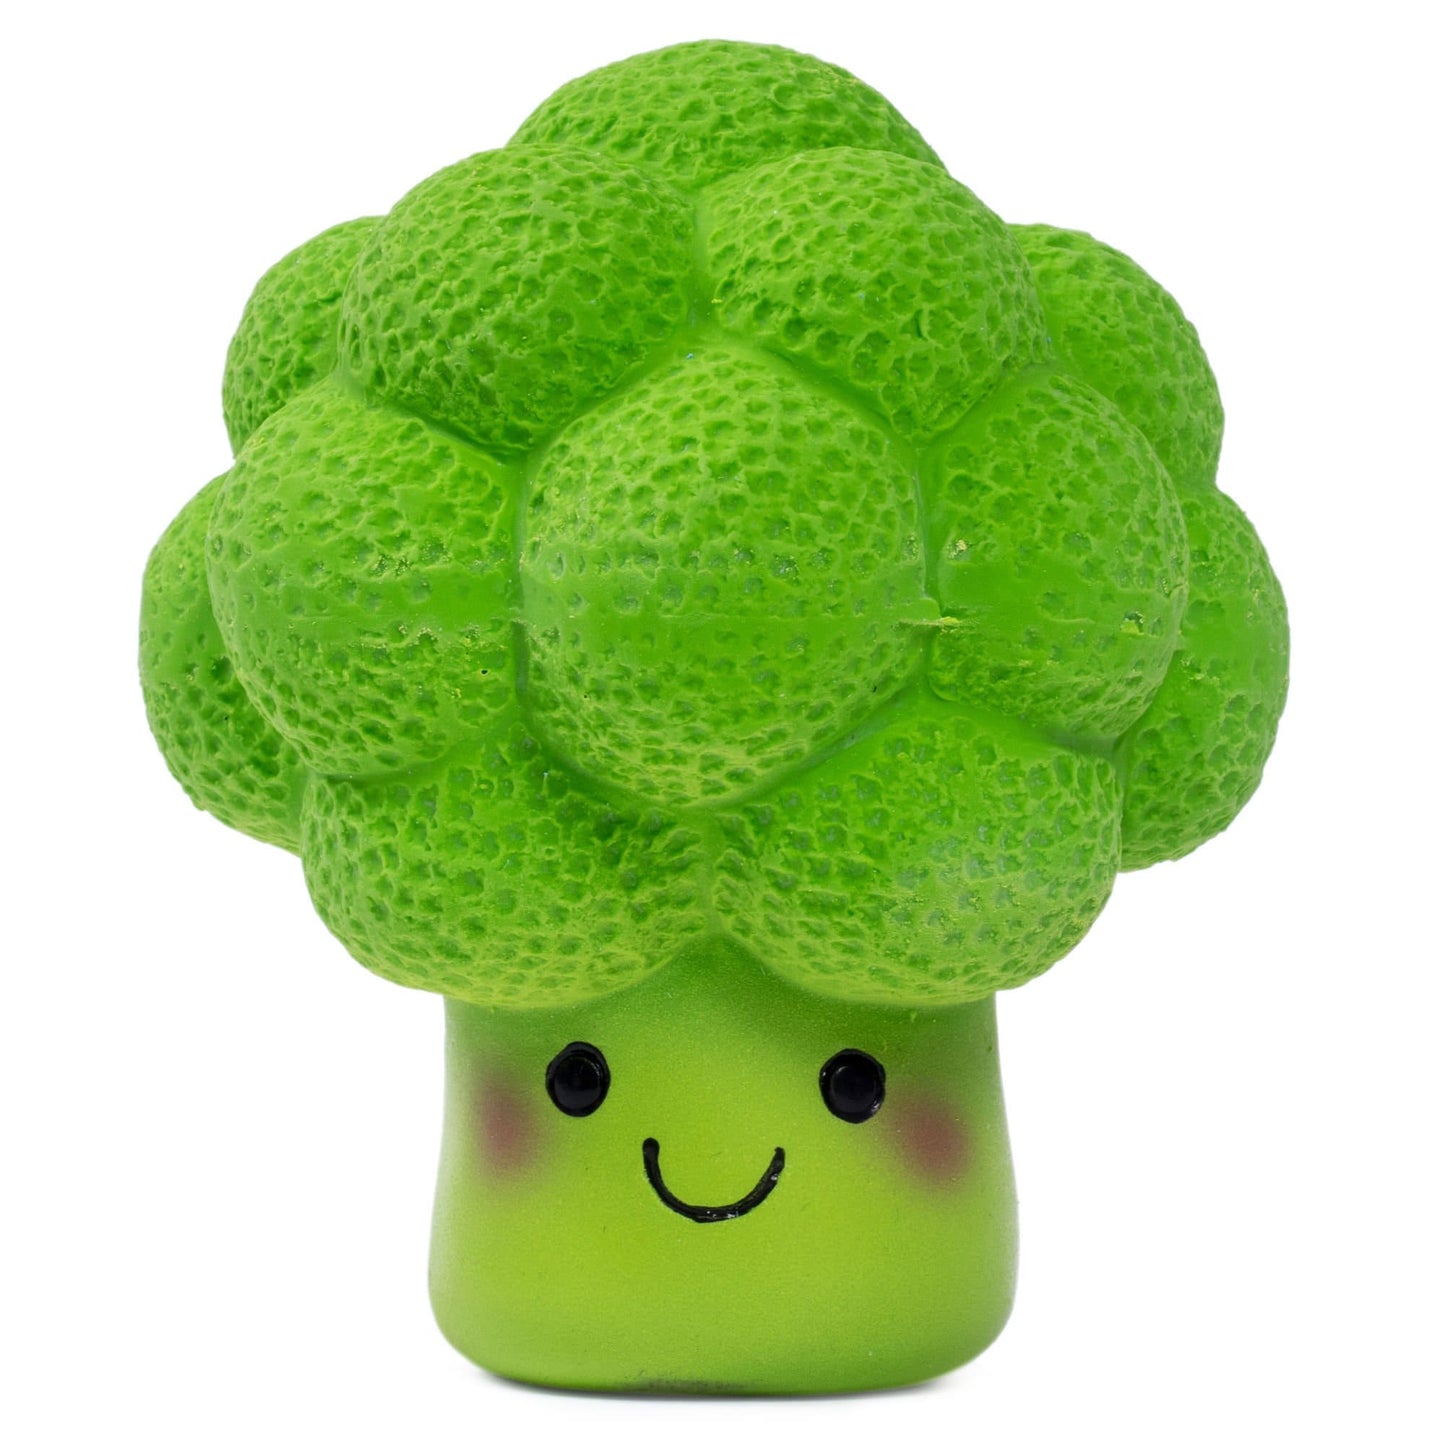 Broccoli Toy